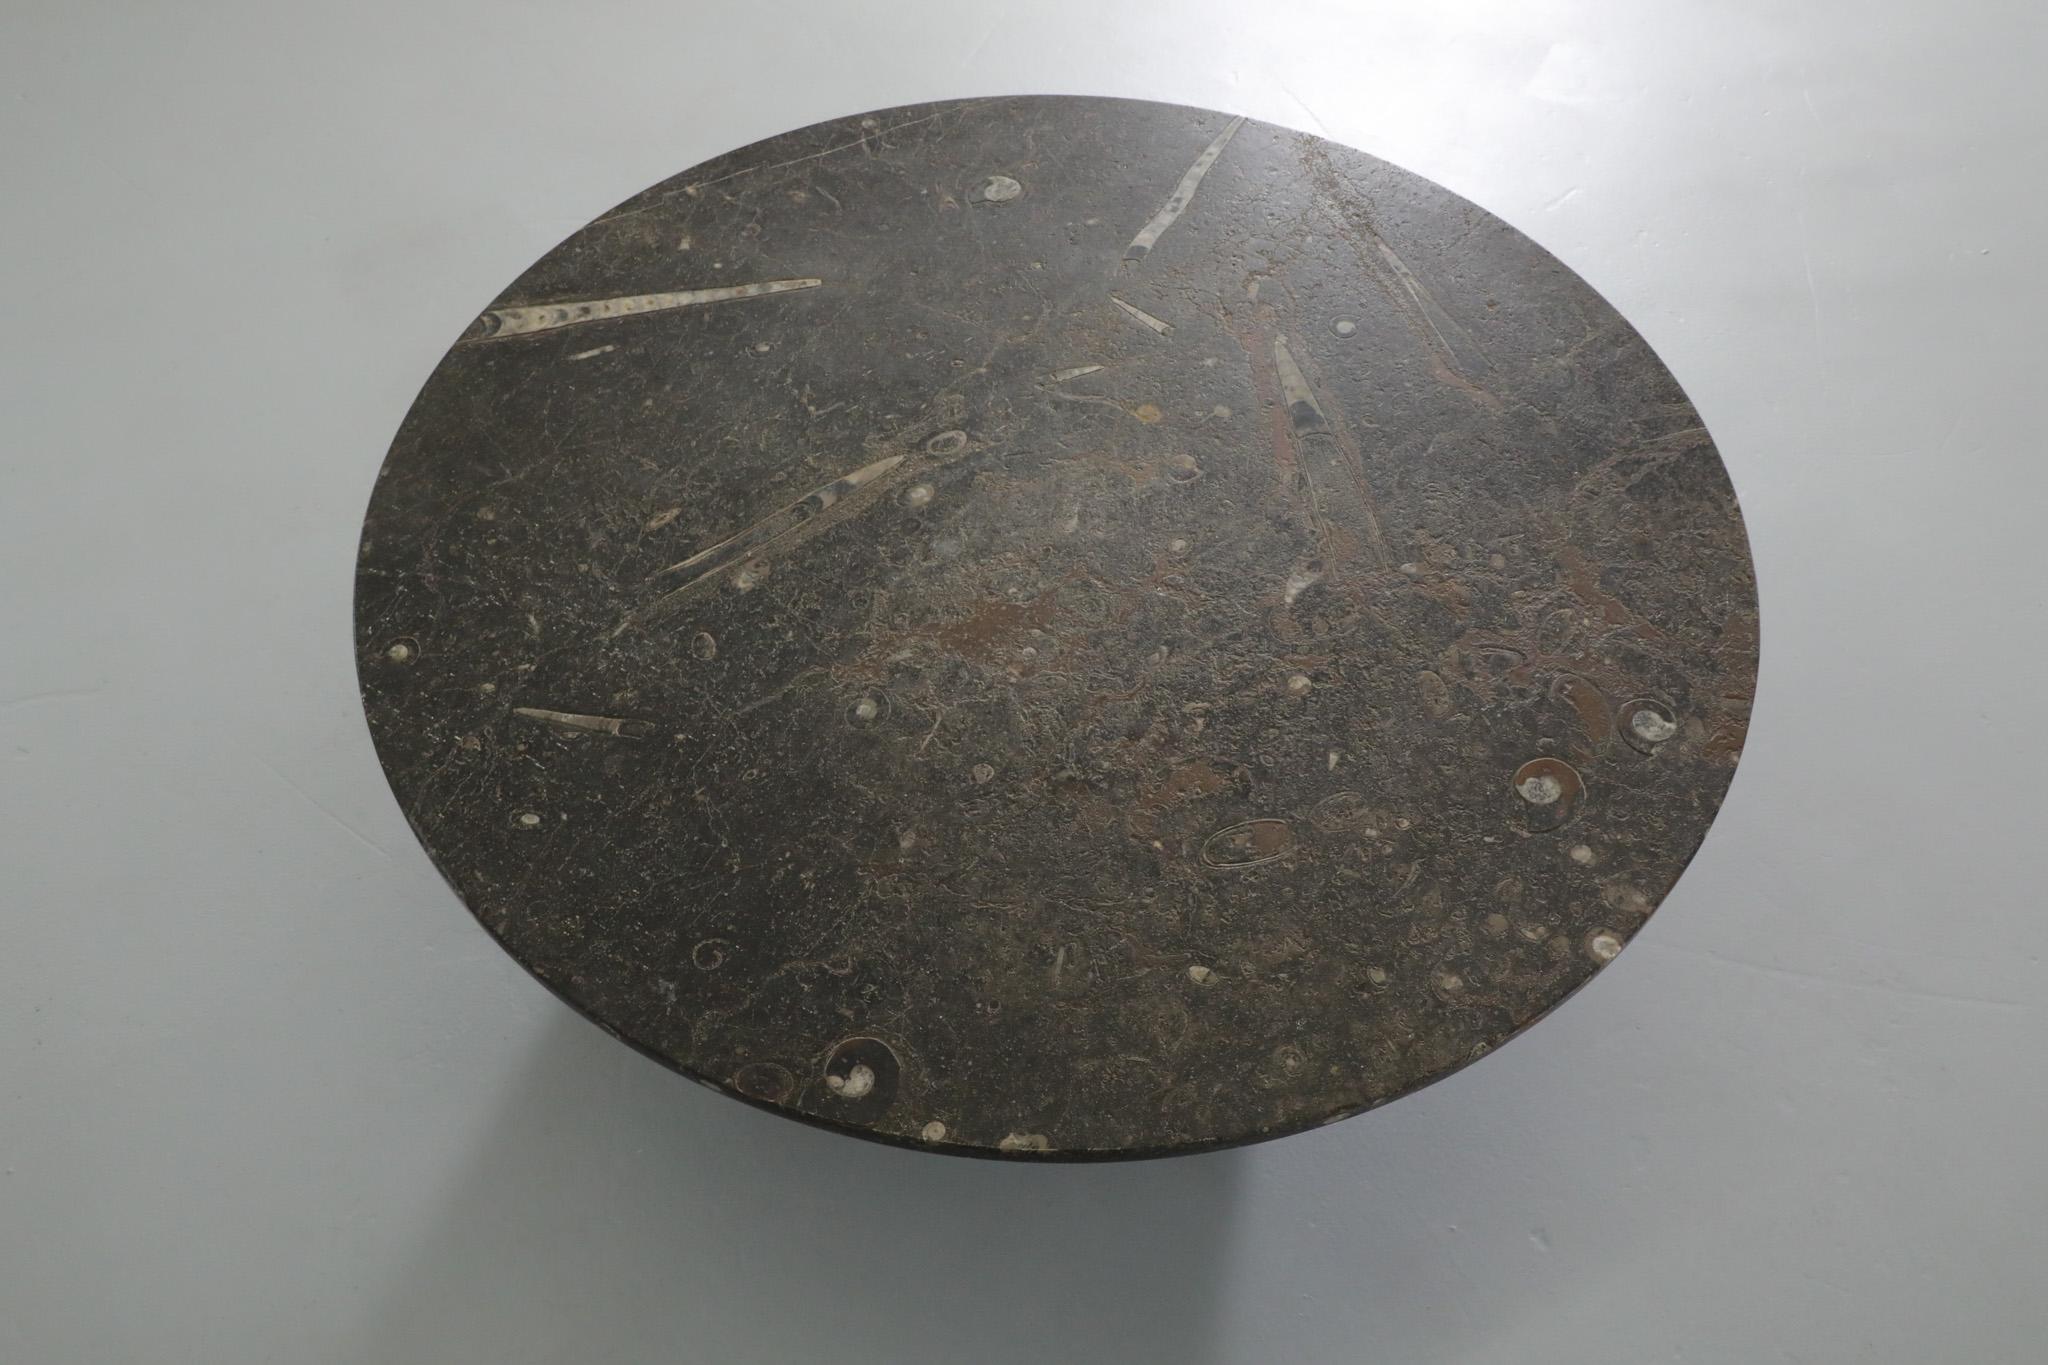 Metal Mid-Century Metaform Style Round Fossil Stone Coffee Table